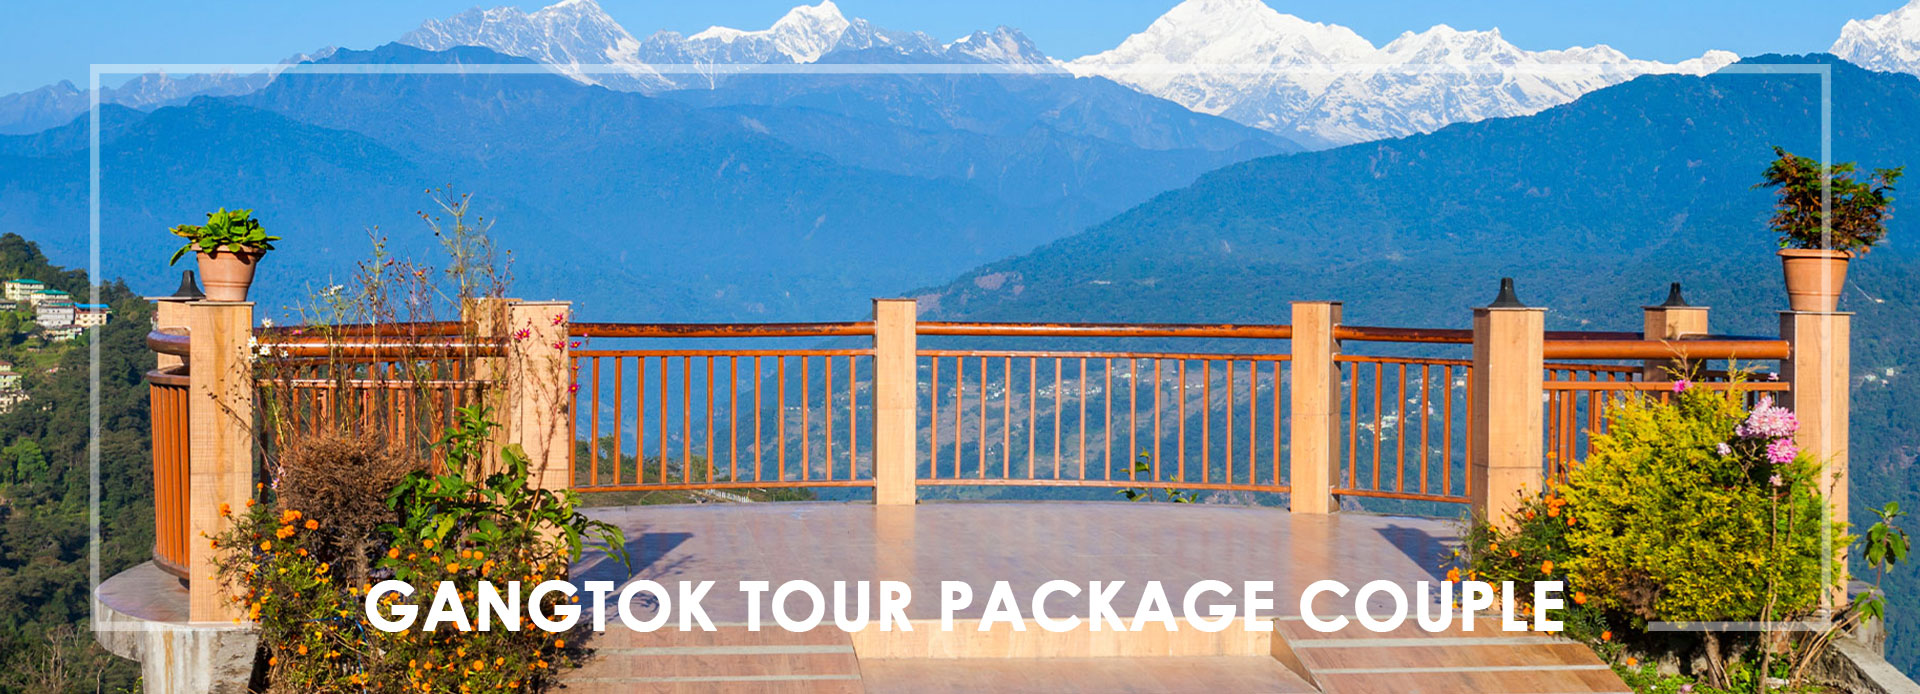  Gangtok Tour Package For Couple - Dream Destination